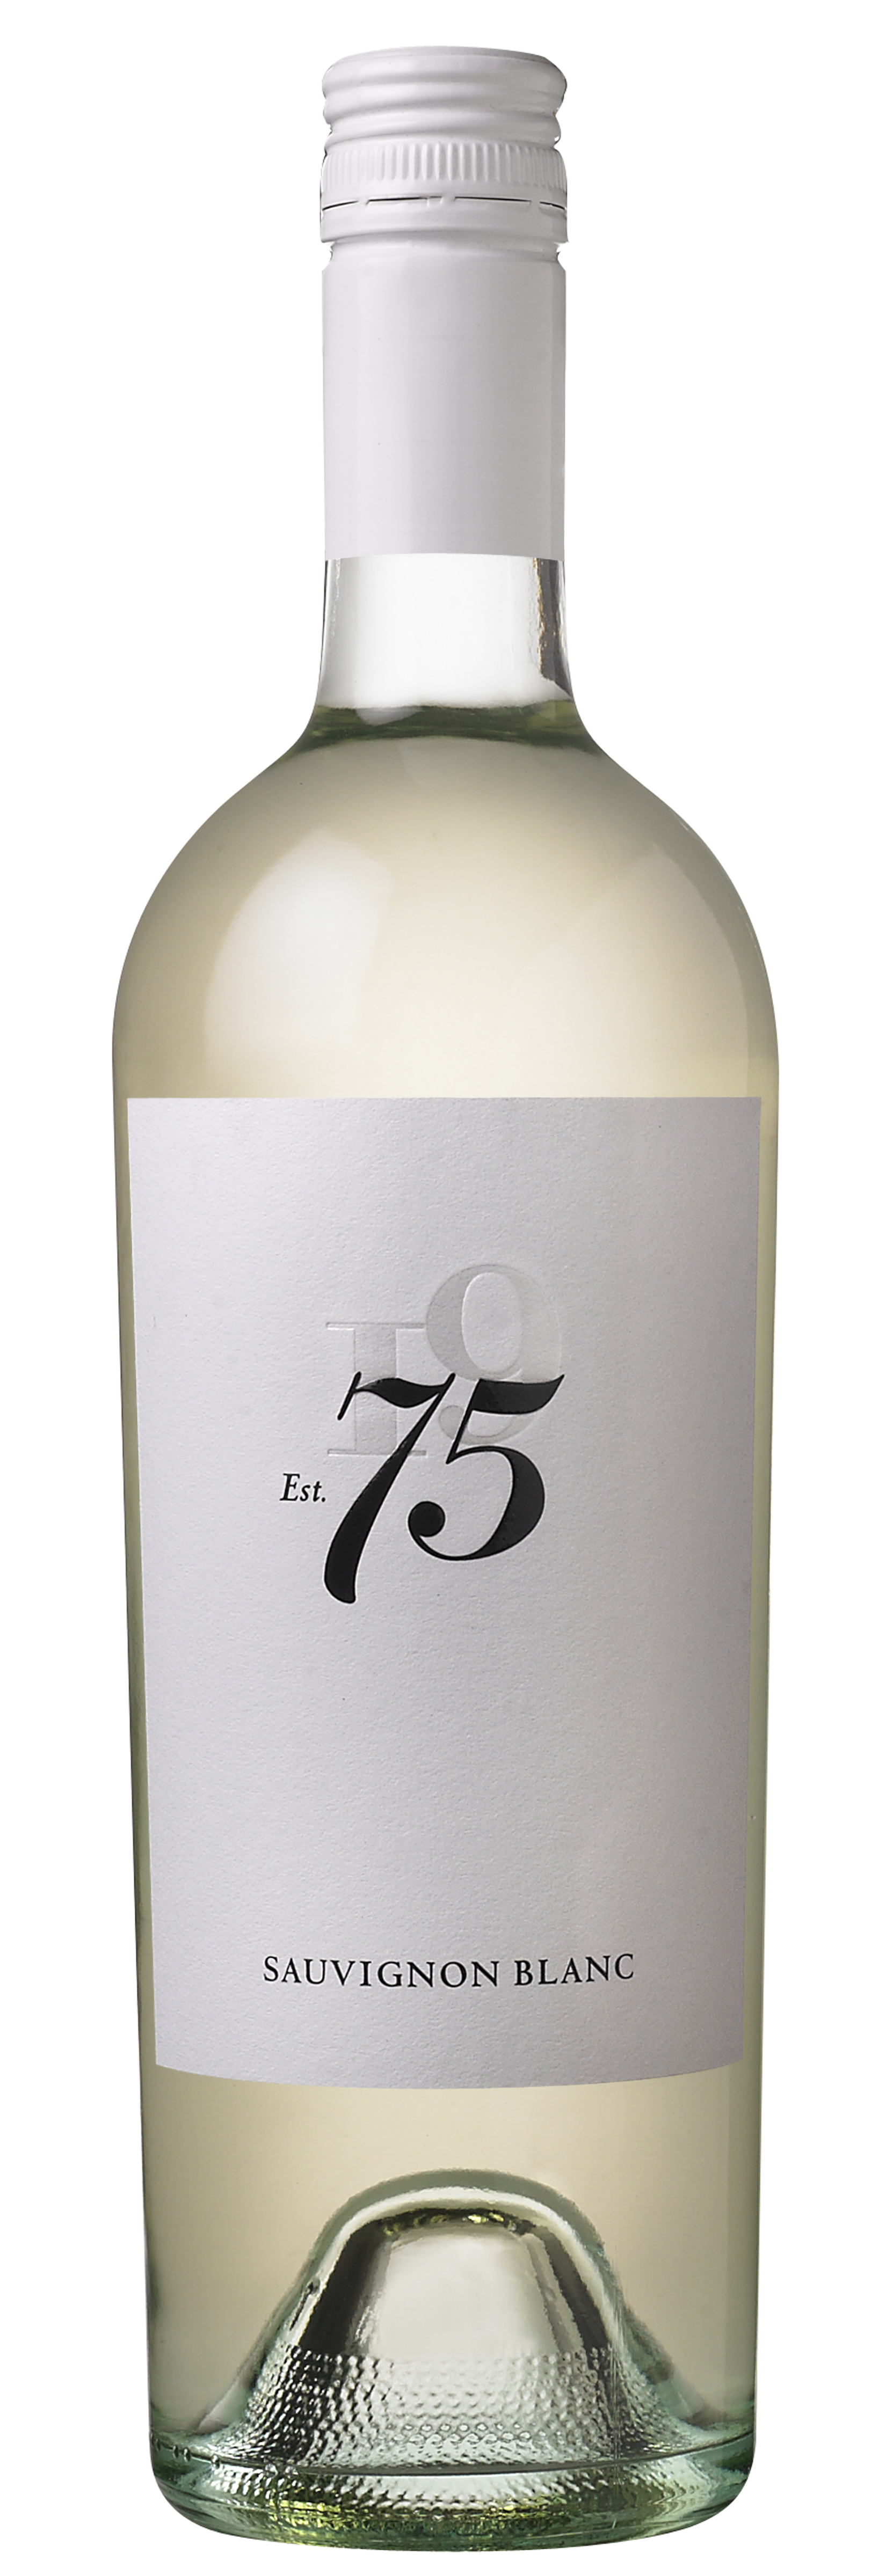 Tuck Beckstoffer 75 Sauvignon Blanc 2012